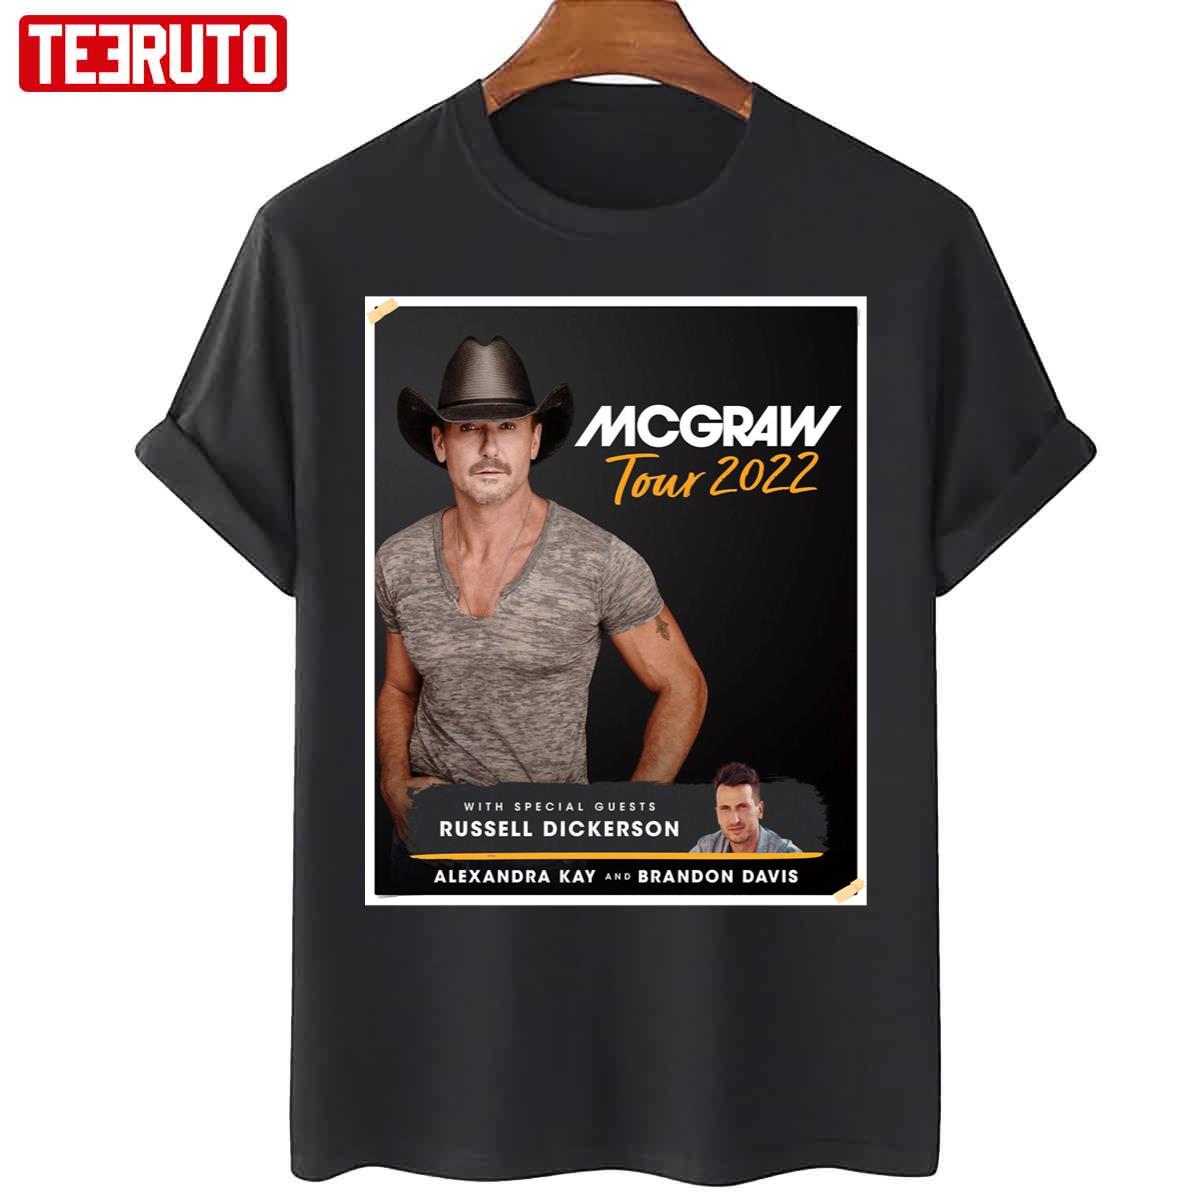 tim mcgraw tour shirt